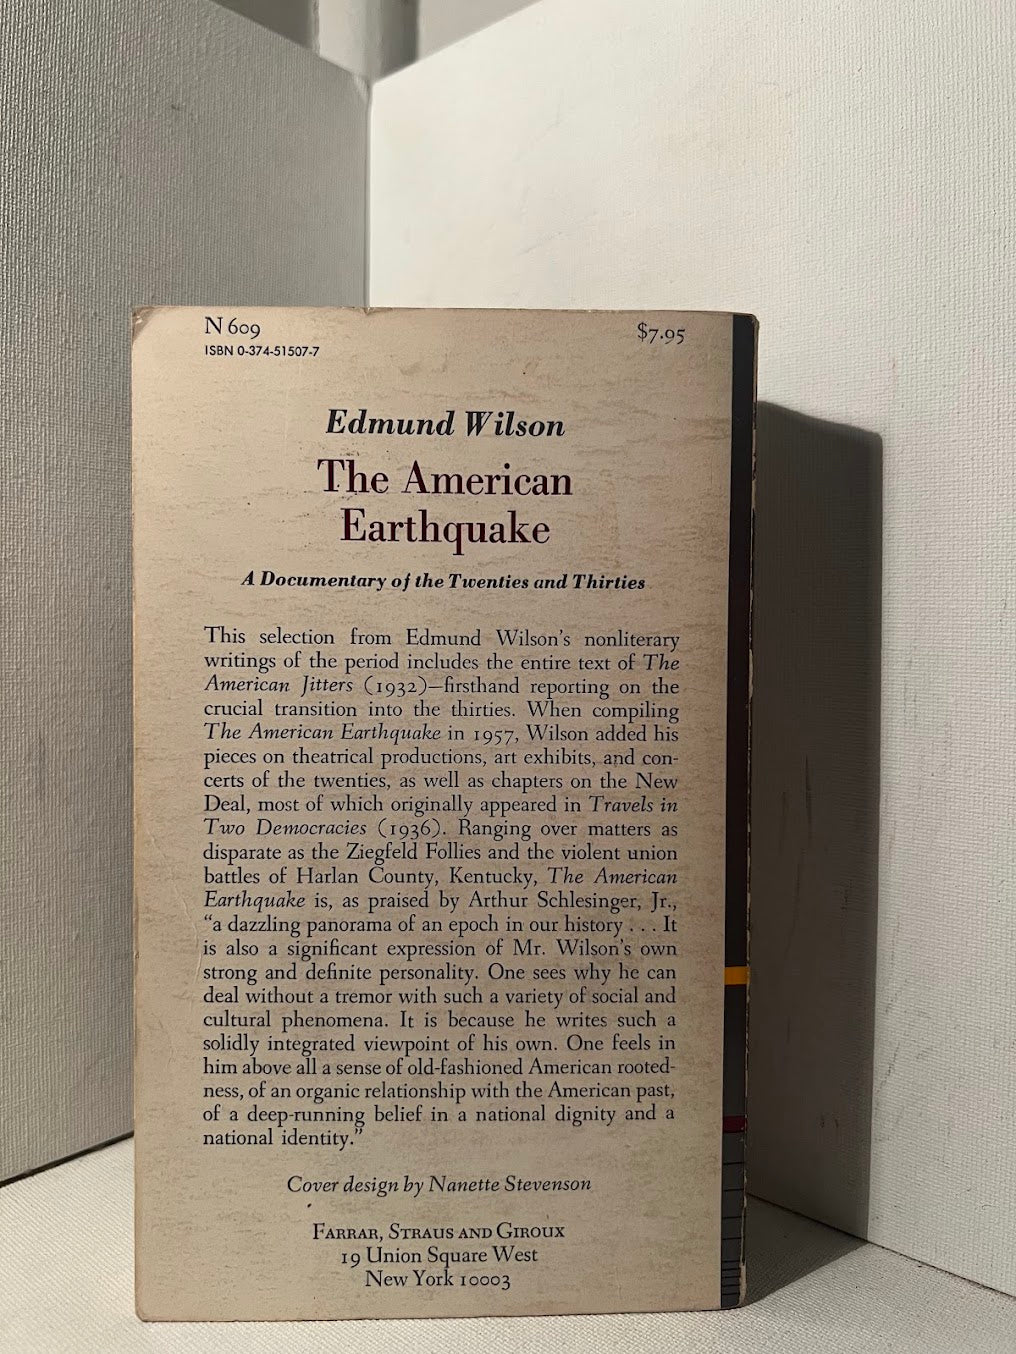 The American Earthquake by Edmund Wilson